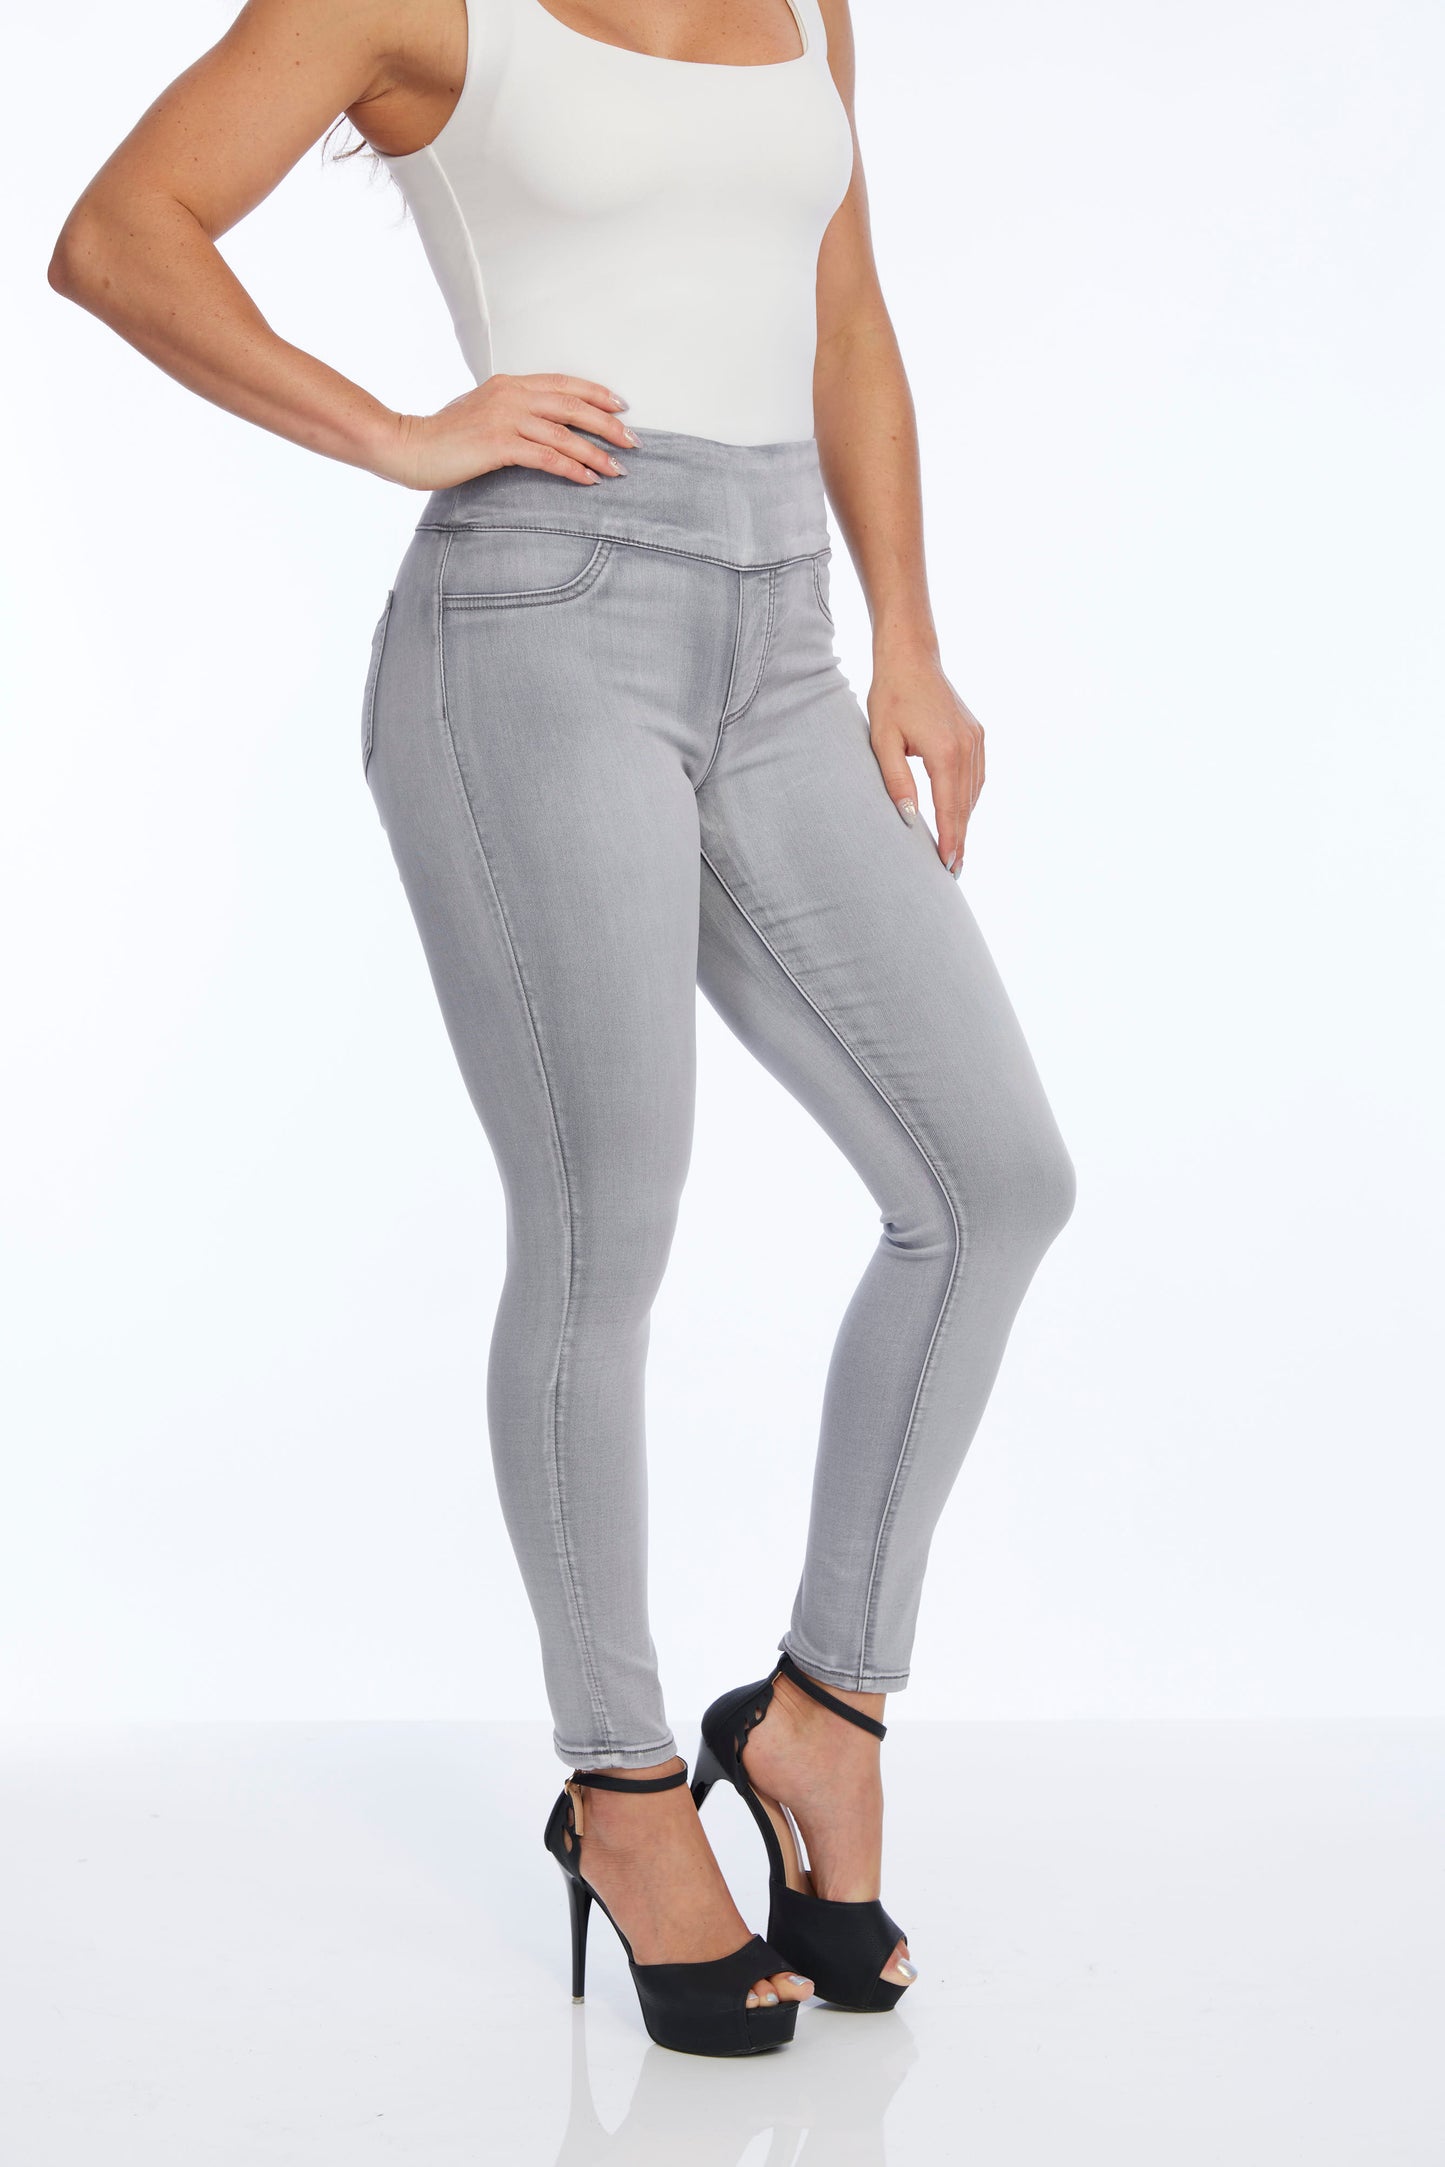 Concrete Grey Skinny Jeans LIOR | Jane